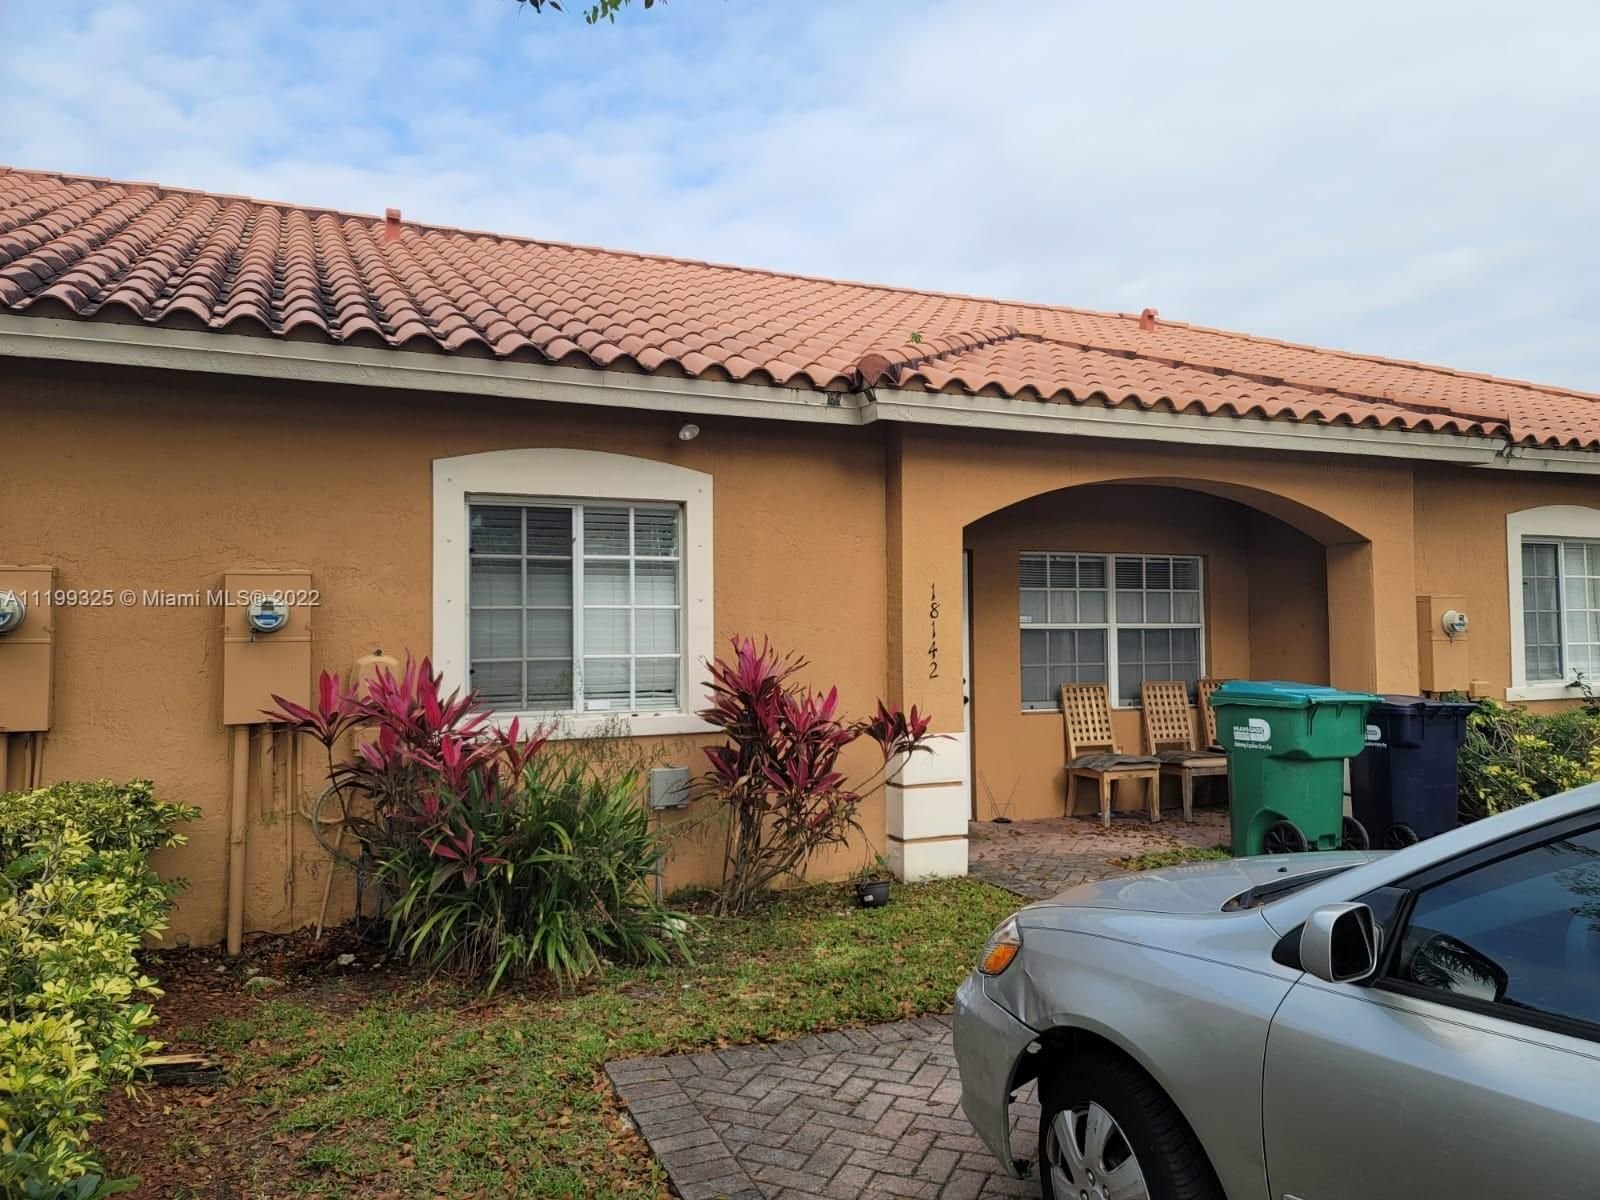 Real estate property located at 18142 109th Pl, Miami-Dade County, Miami, FL